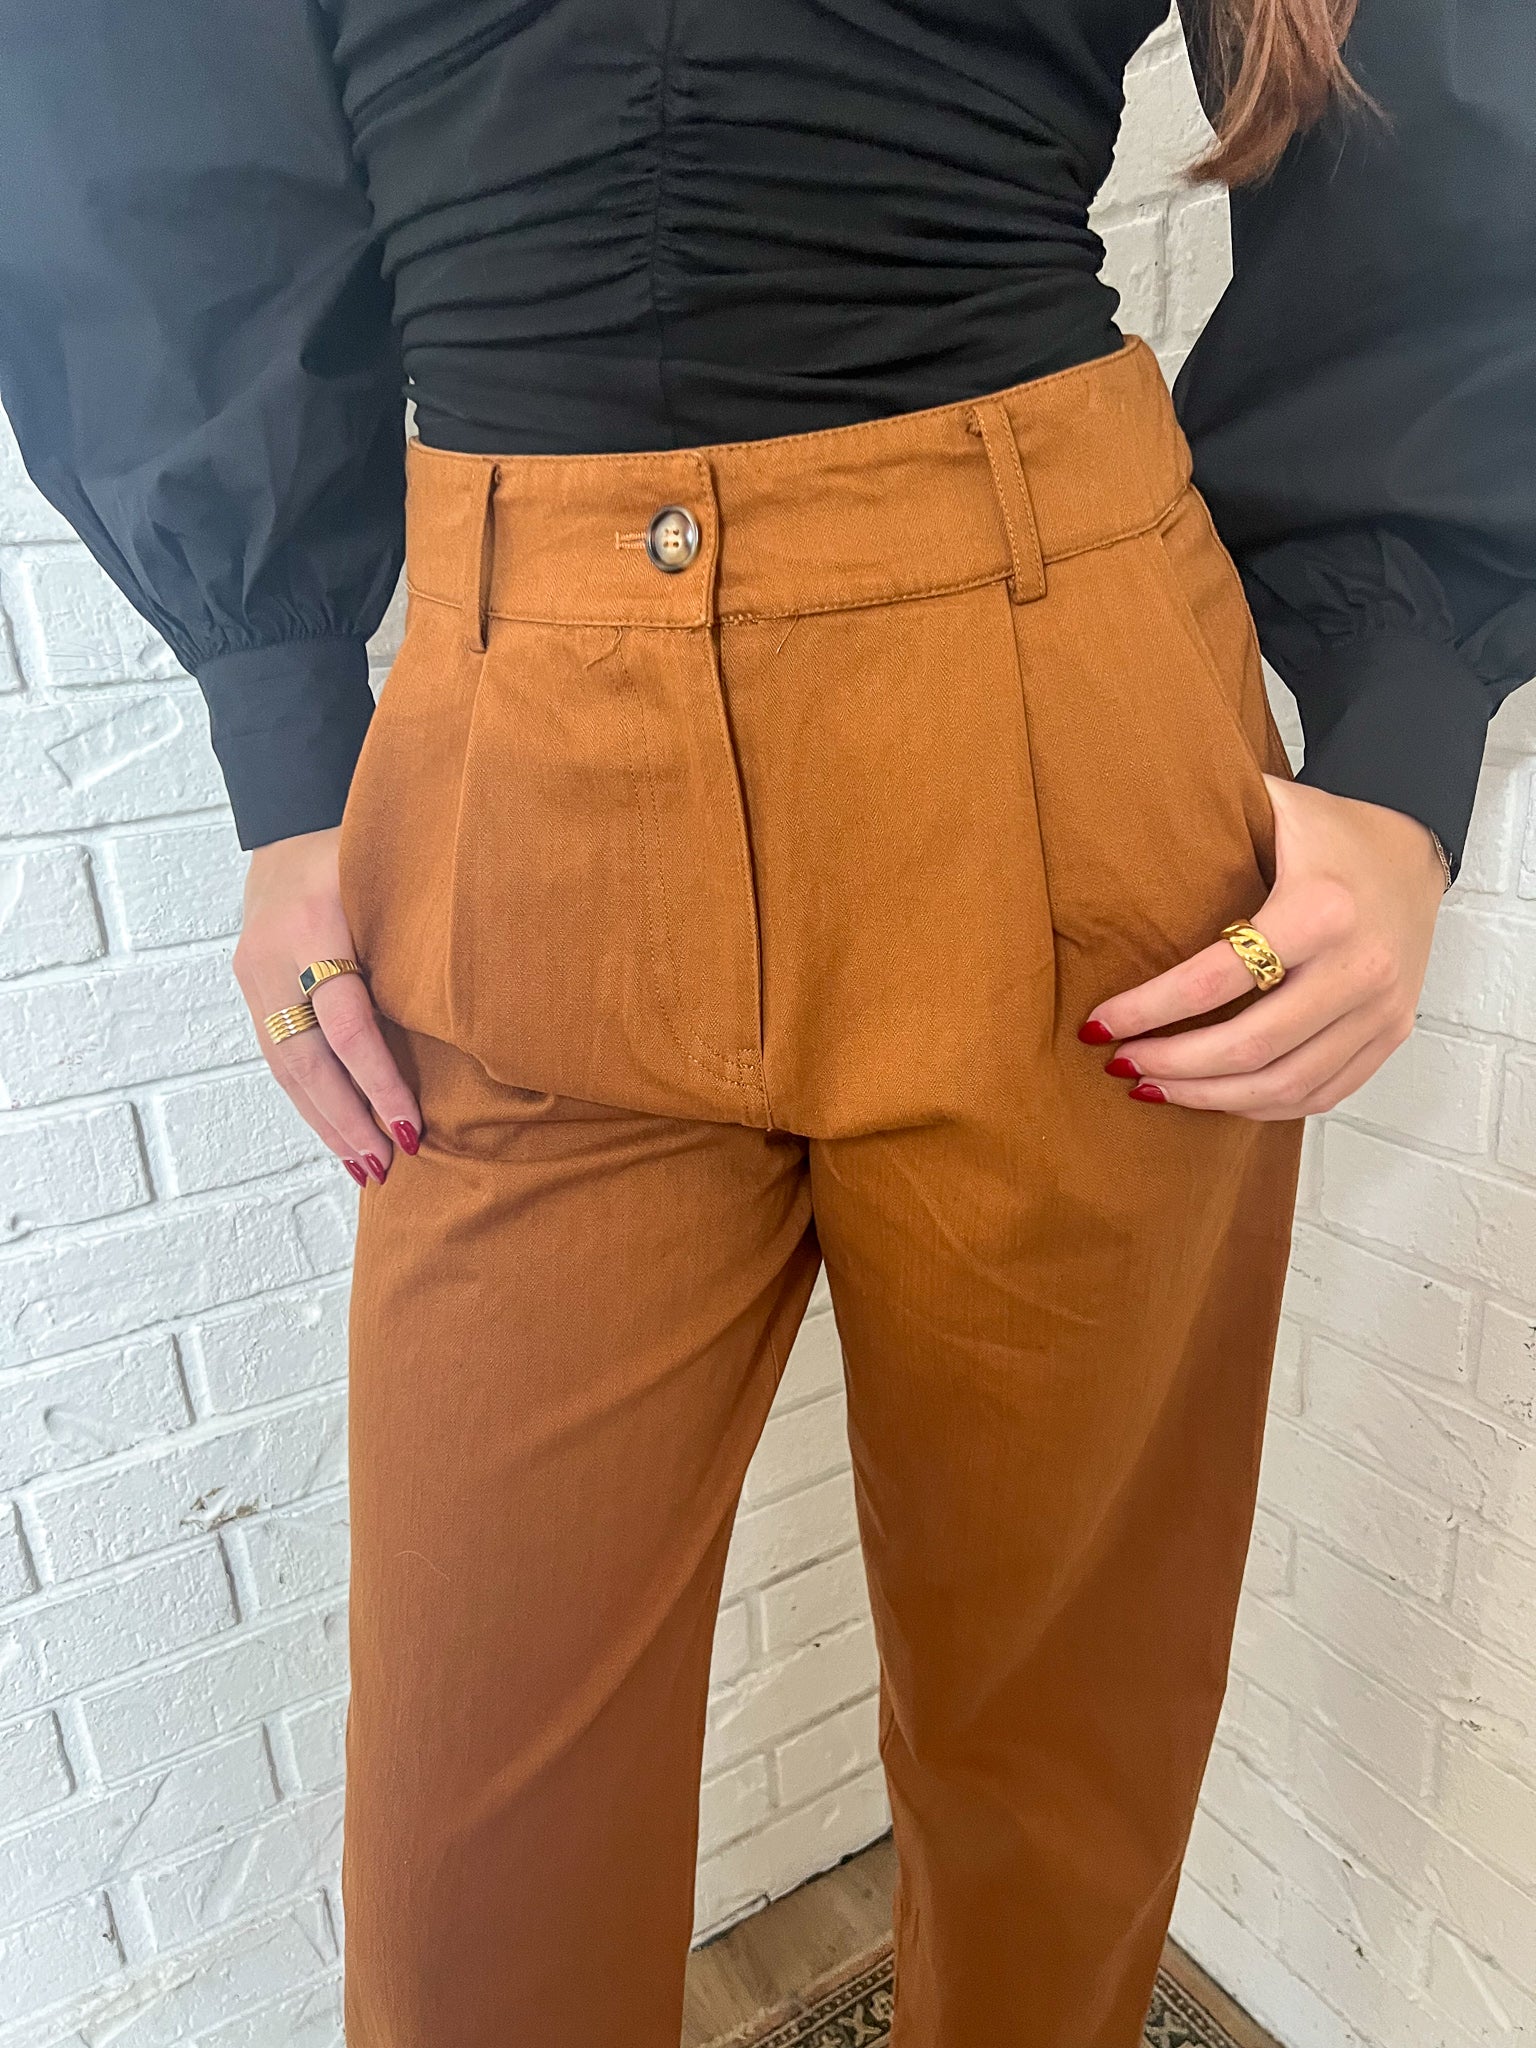 Buy IQRAAR Cotton Blend Trouser Pant for Women (Orange) at Amazon.in